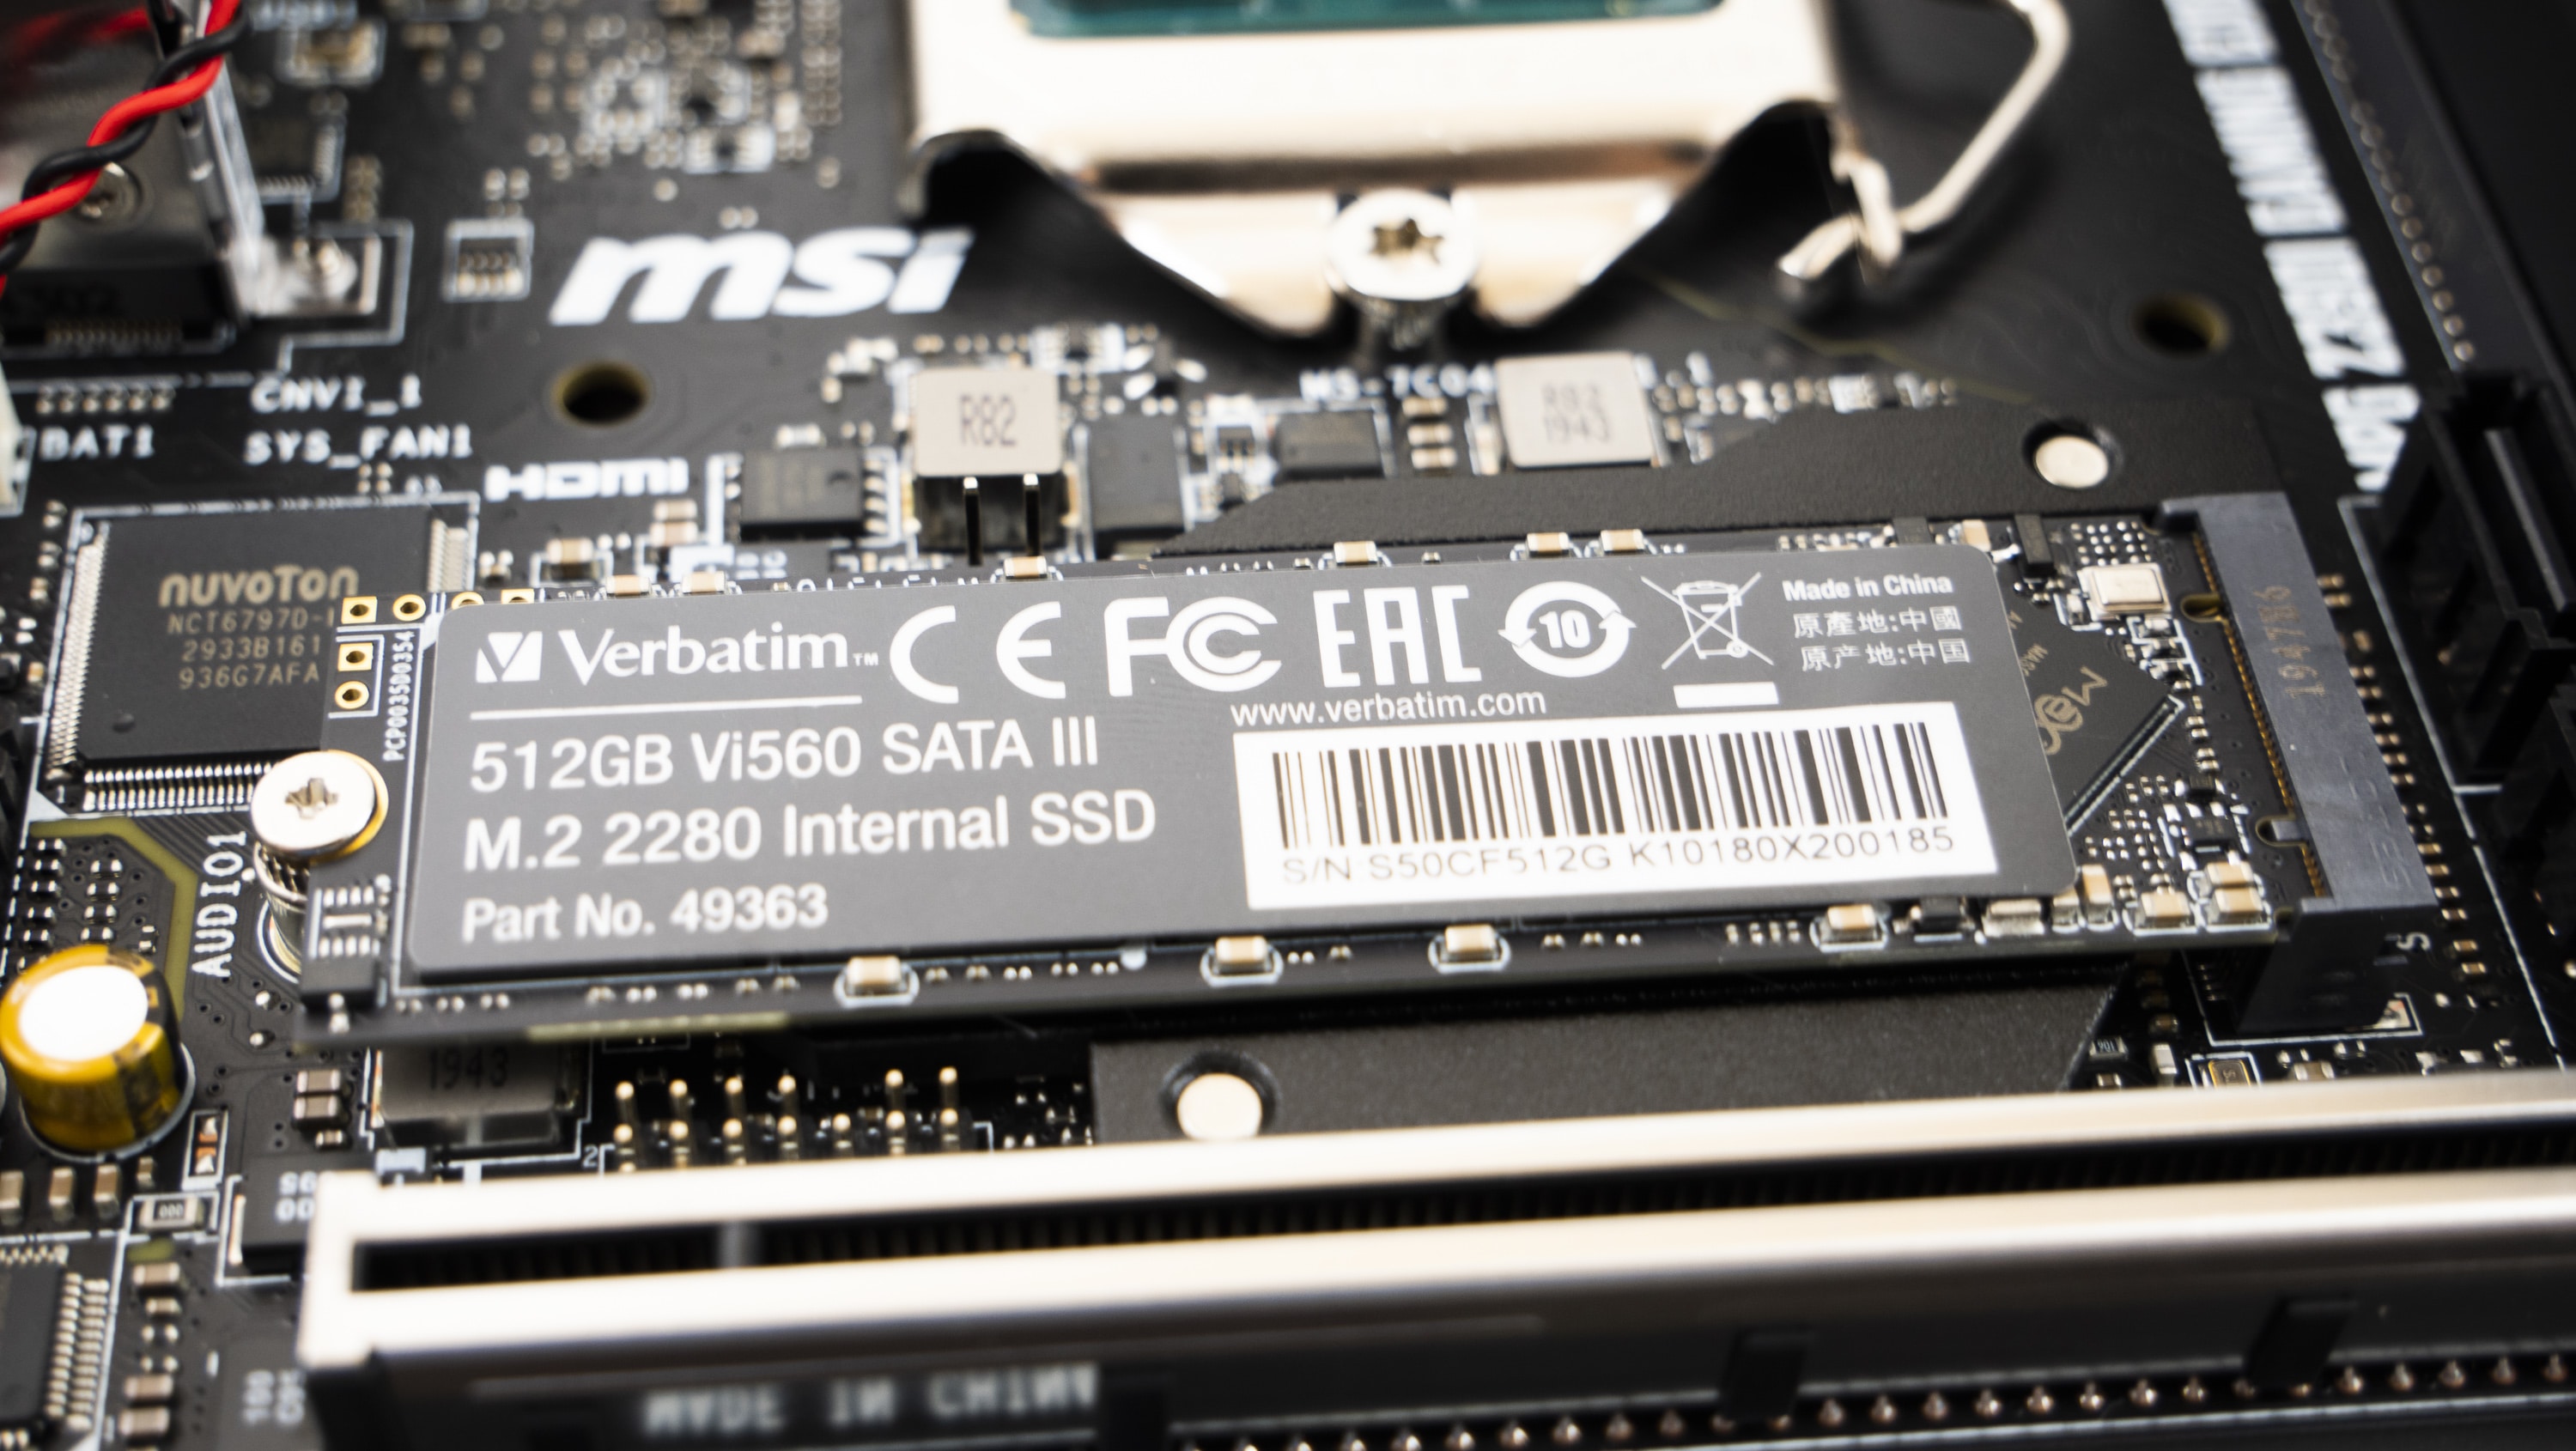 SSD im Test: Verbatim Vi560 S3